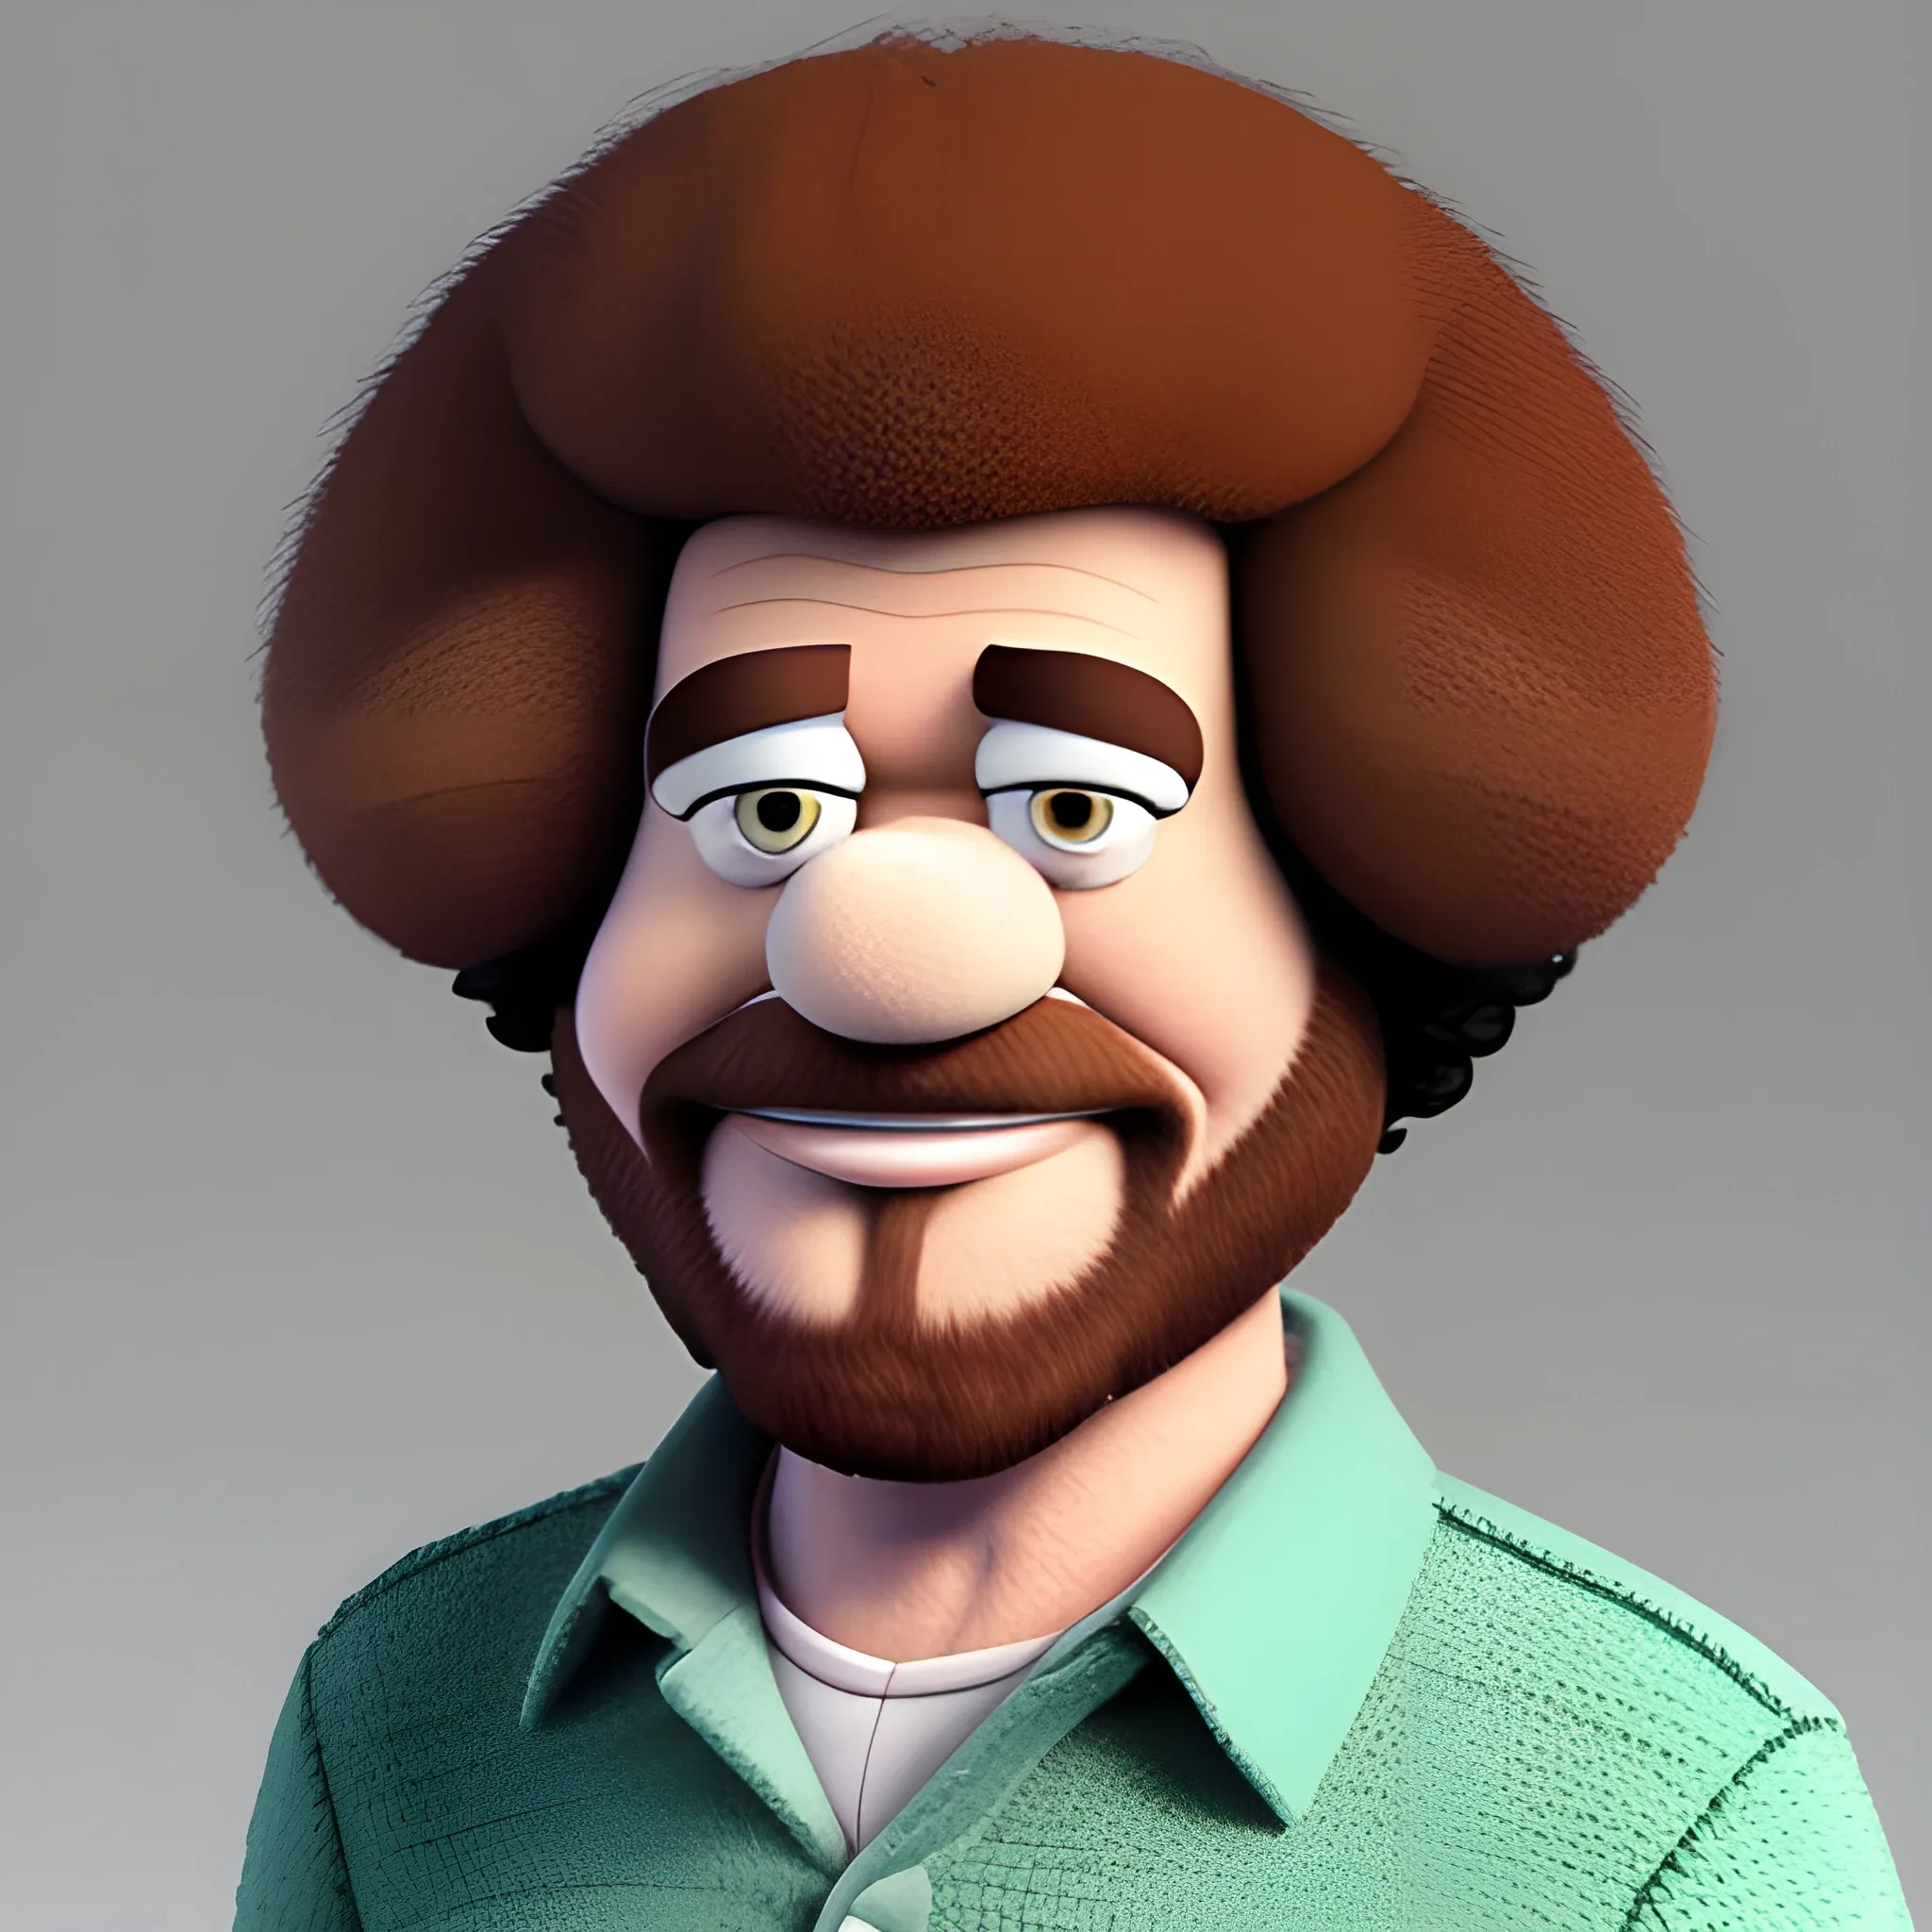 Bob Ross, cartoon , muppet, furry, yarn, 3D
, hair, realistic, hairy